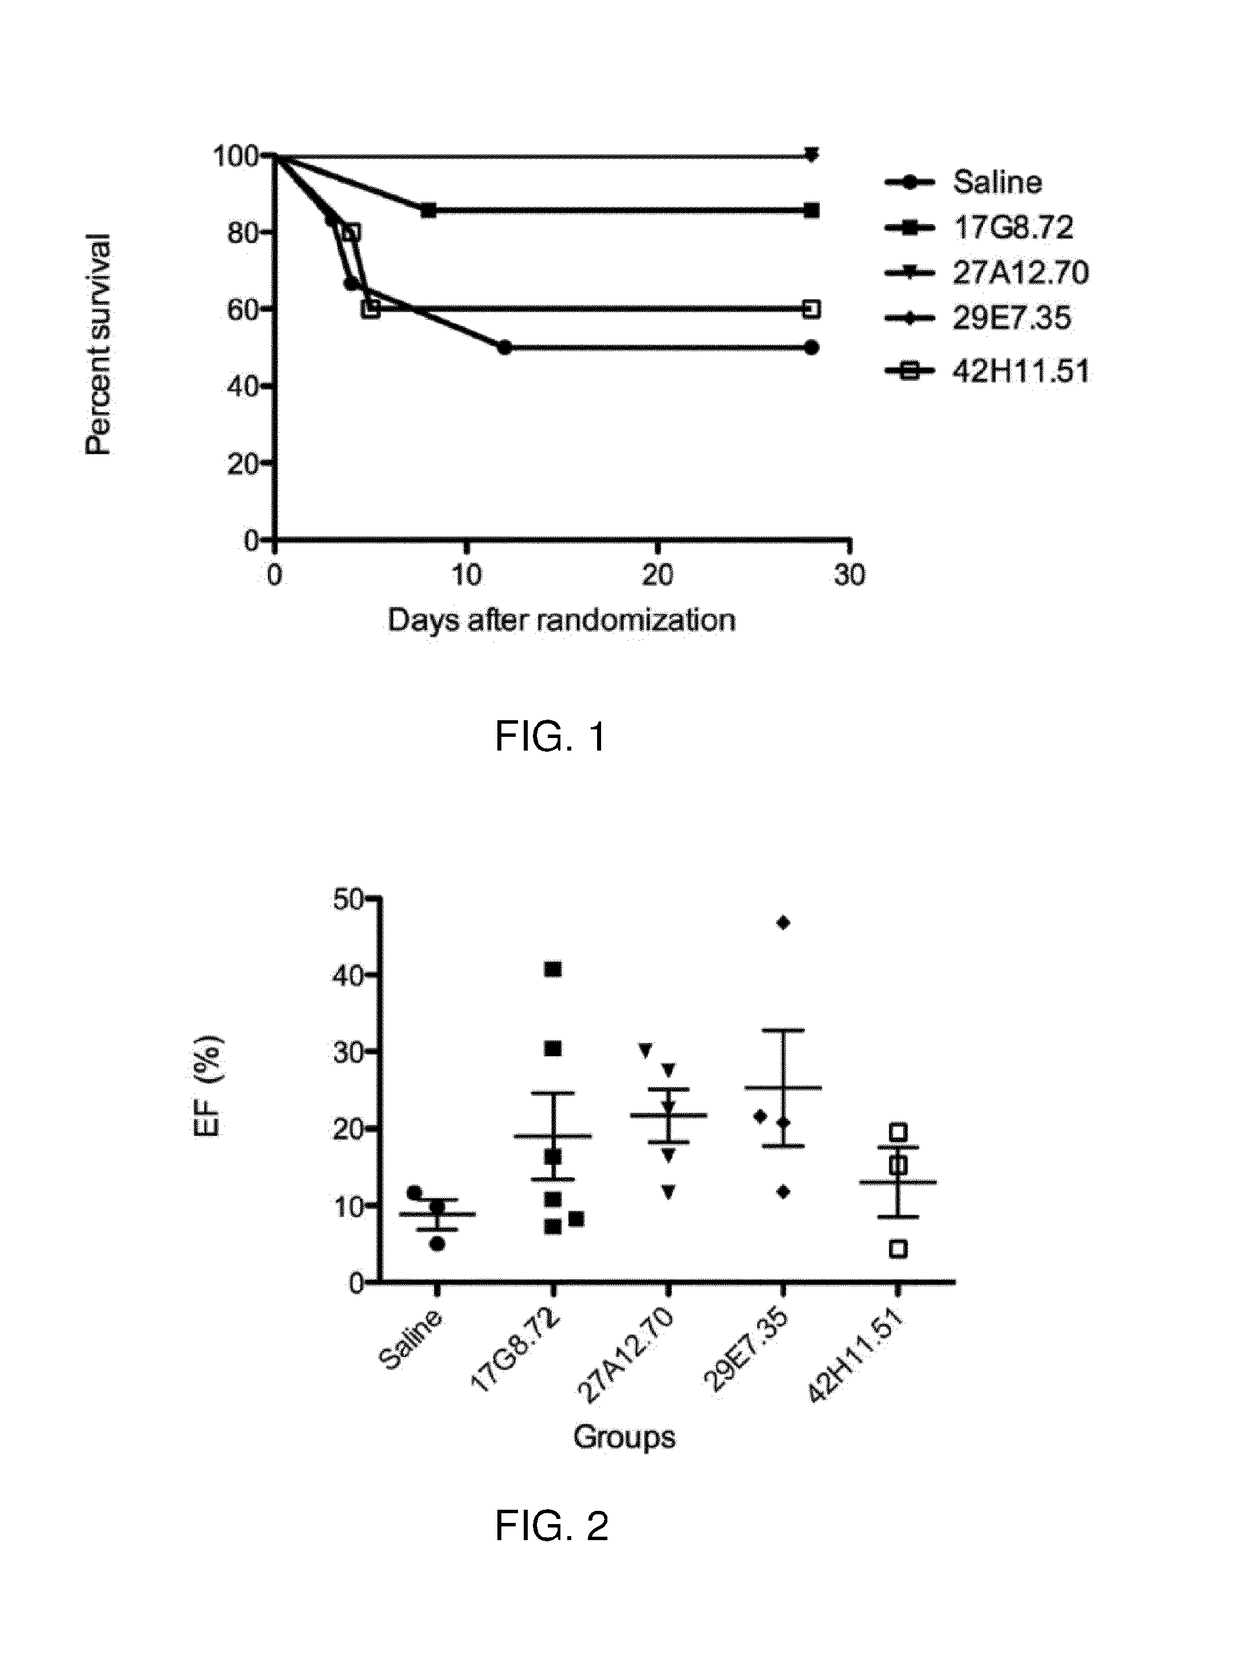 Immunoglobulin-like molecules directed against fibronectin-EDA